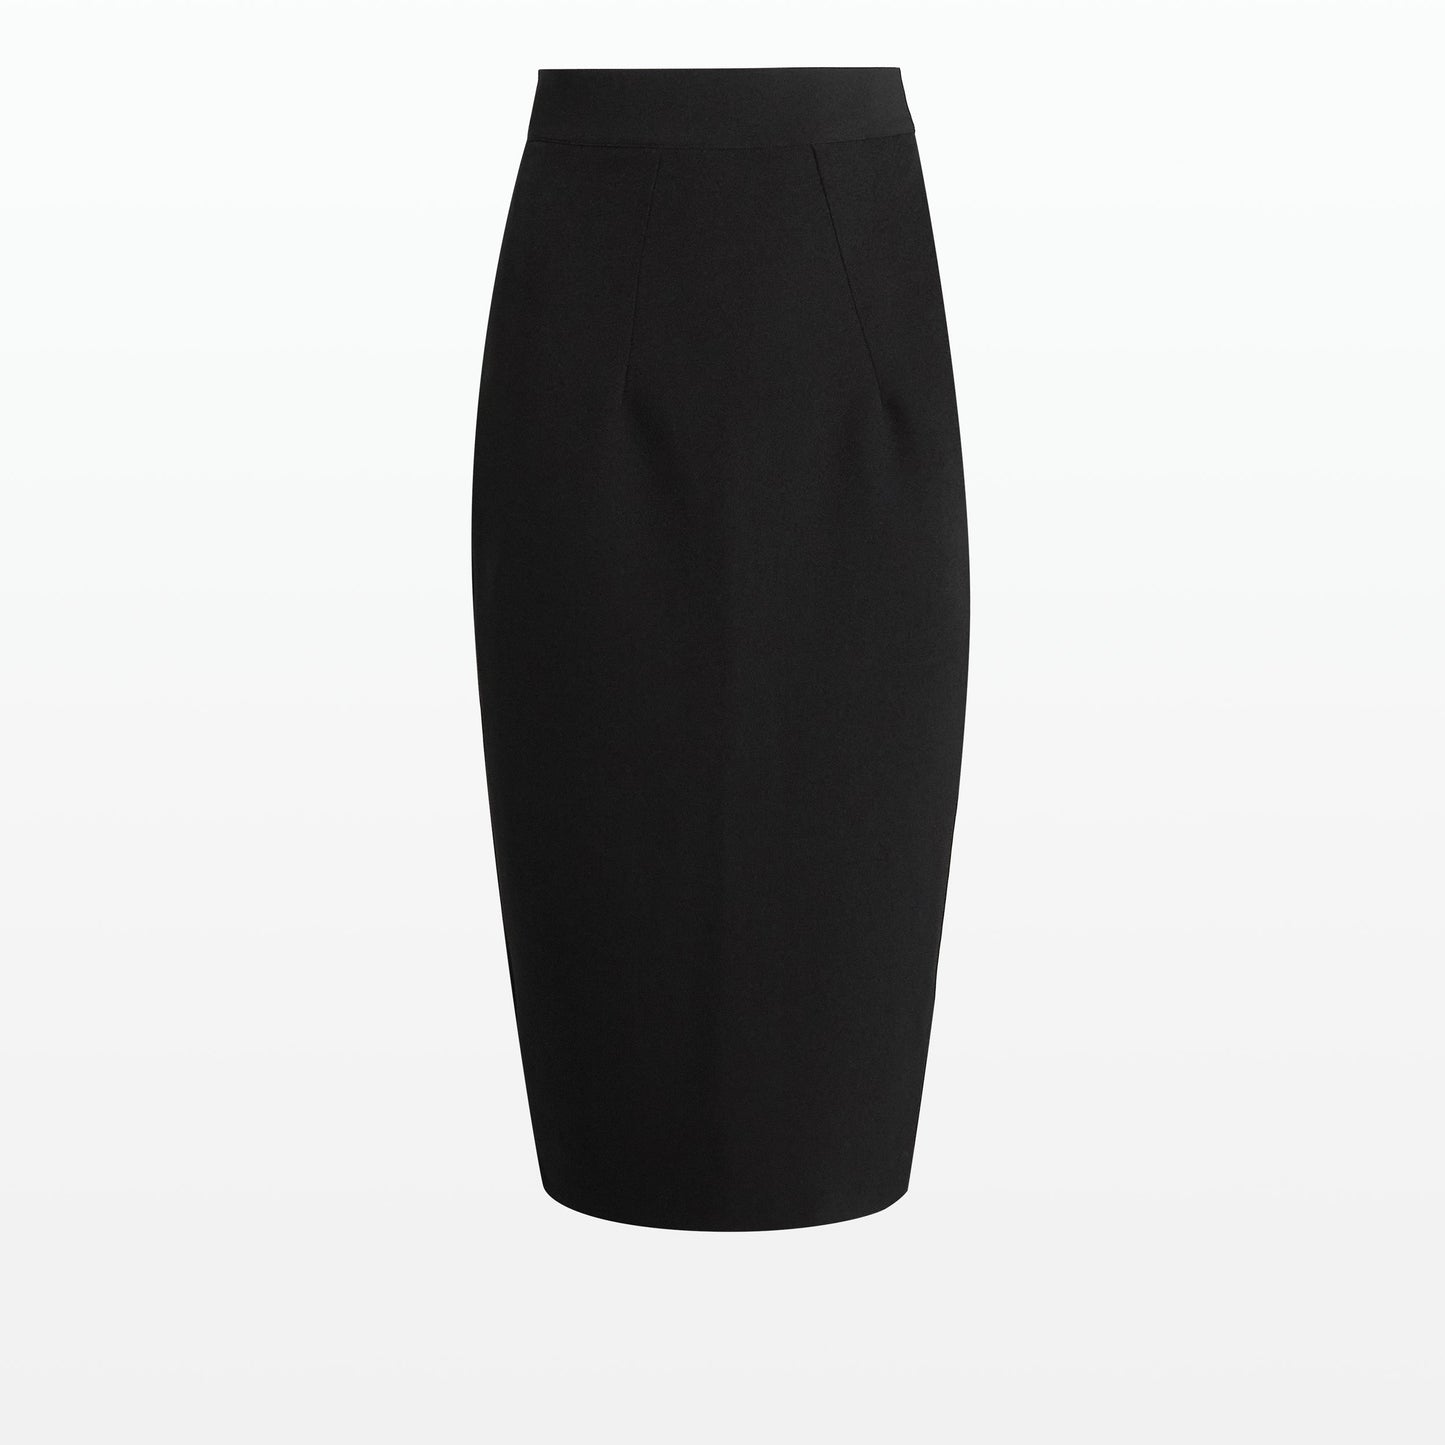 Hokoku Black Pencil Skirt